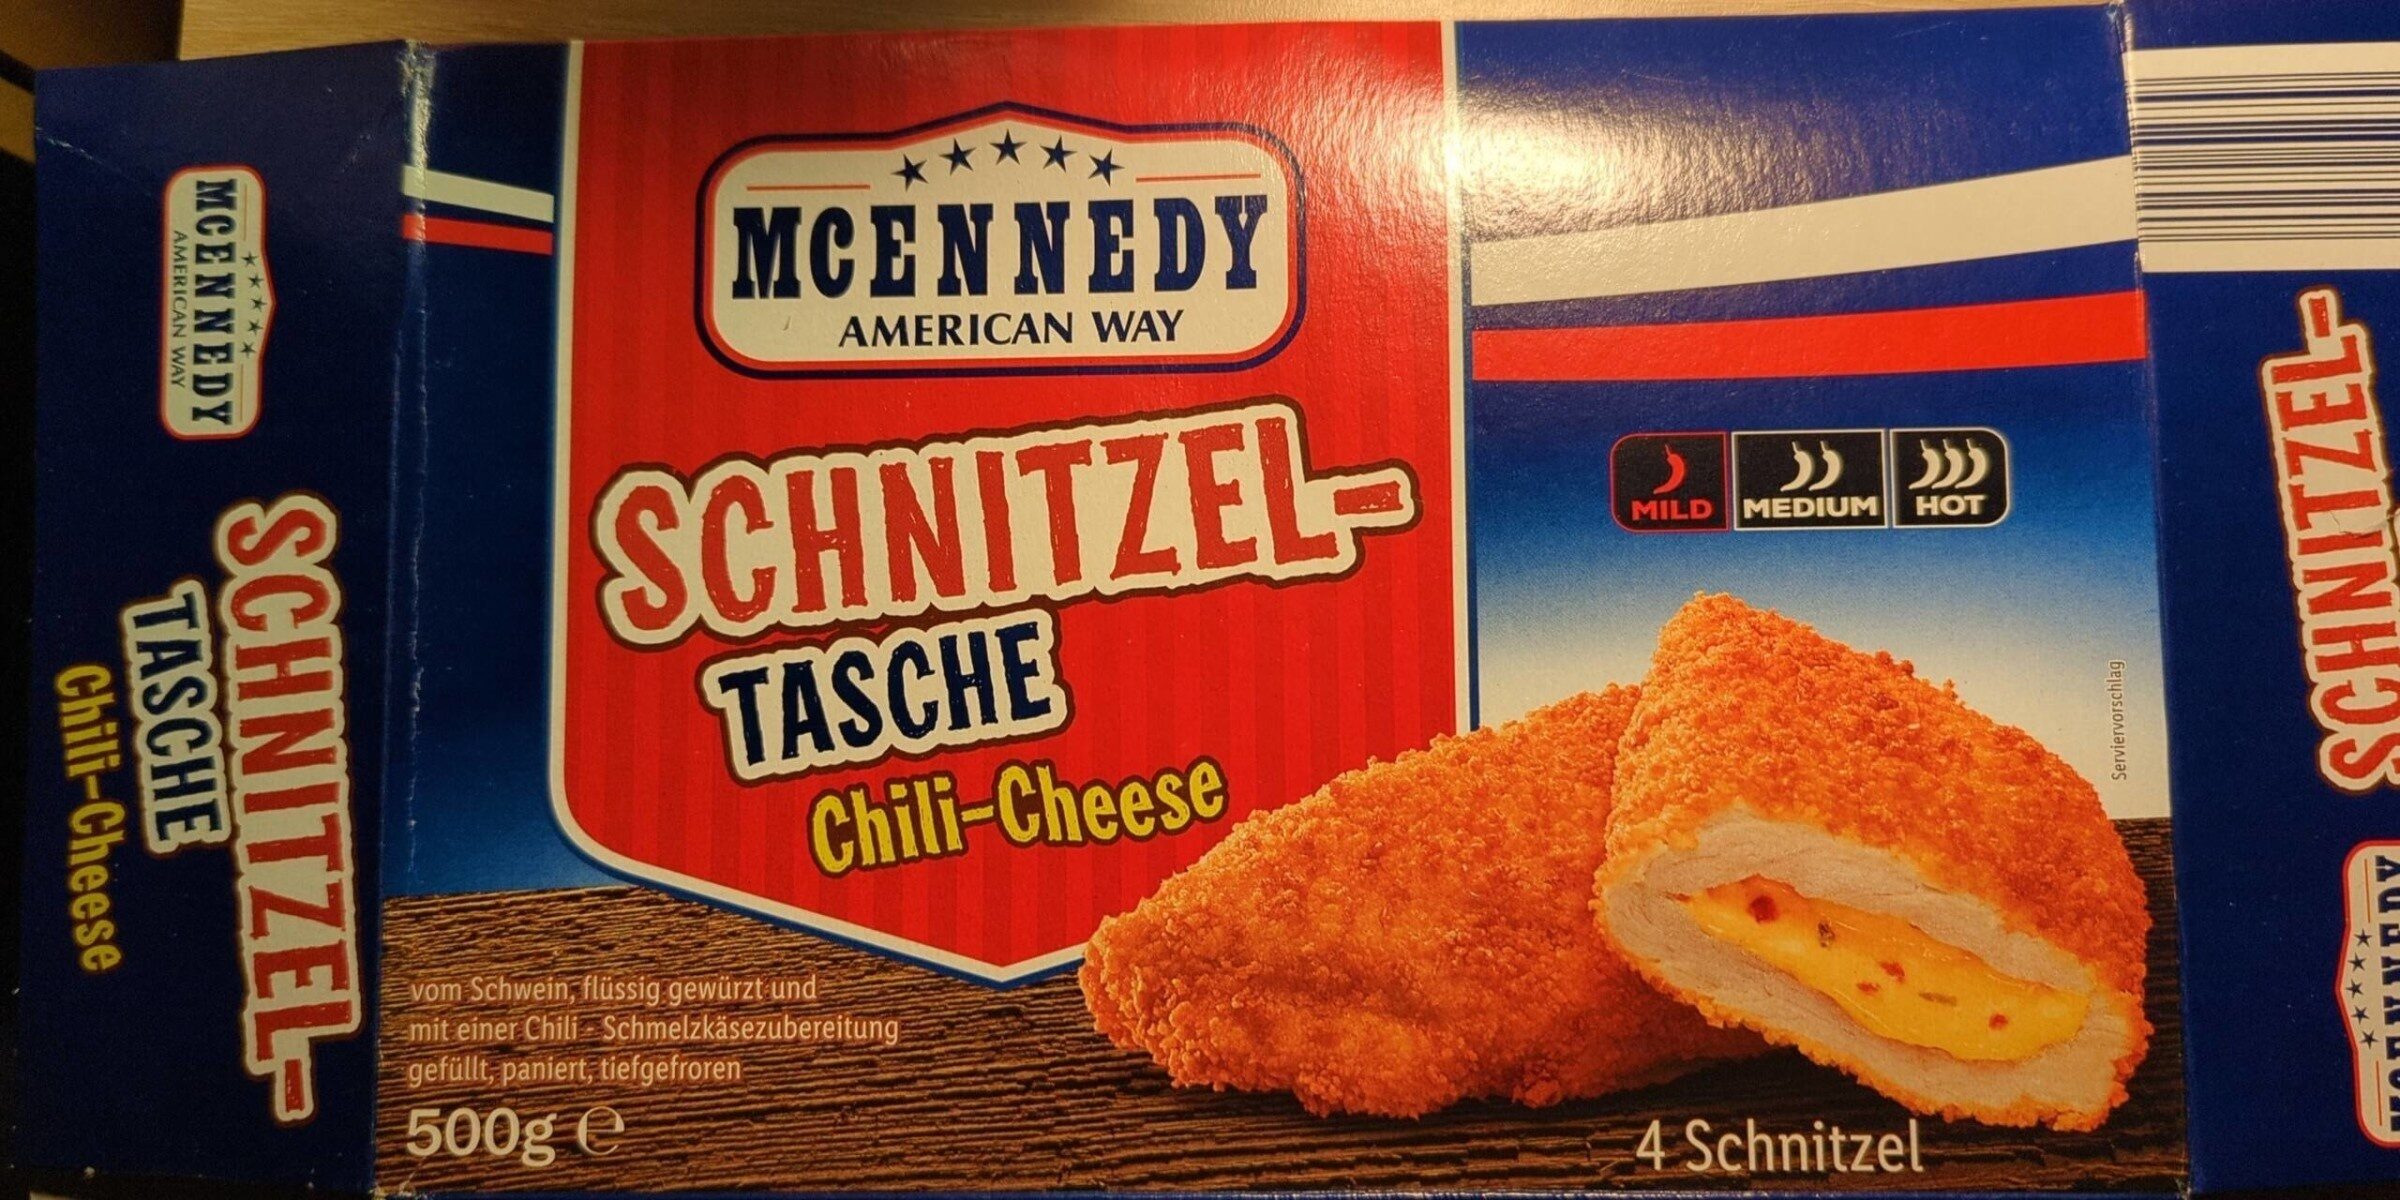 Schnitzel-Tasche Chili-Cheese - Product - en